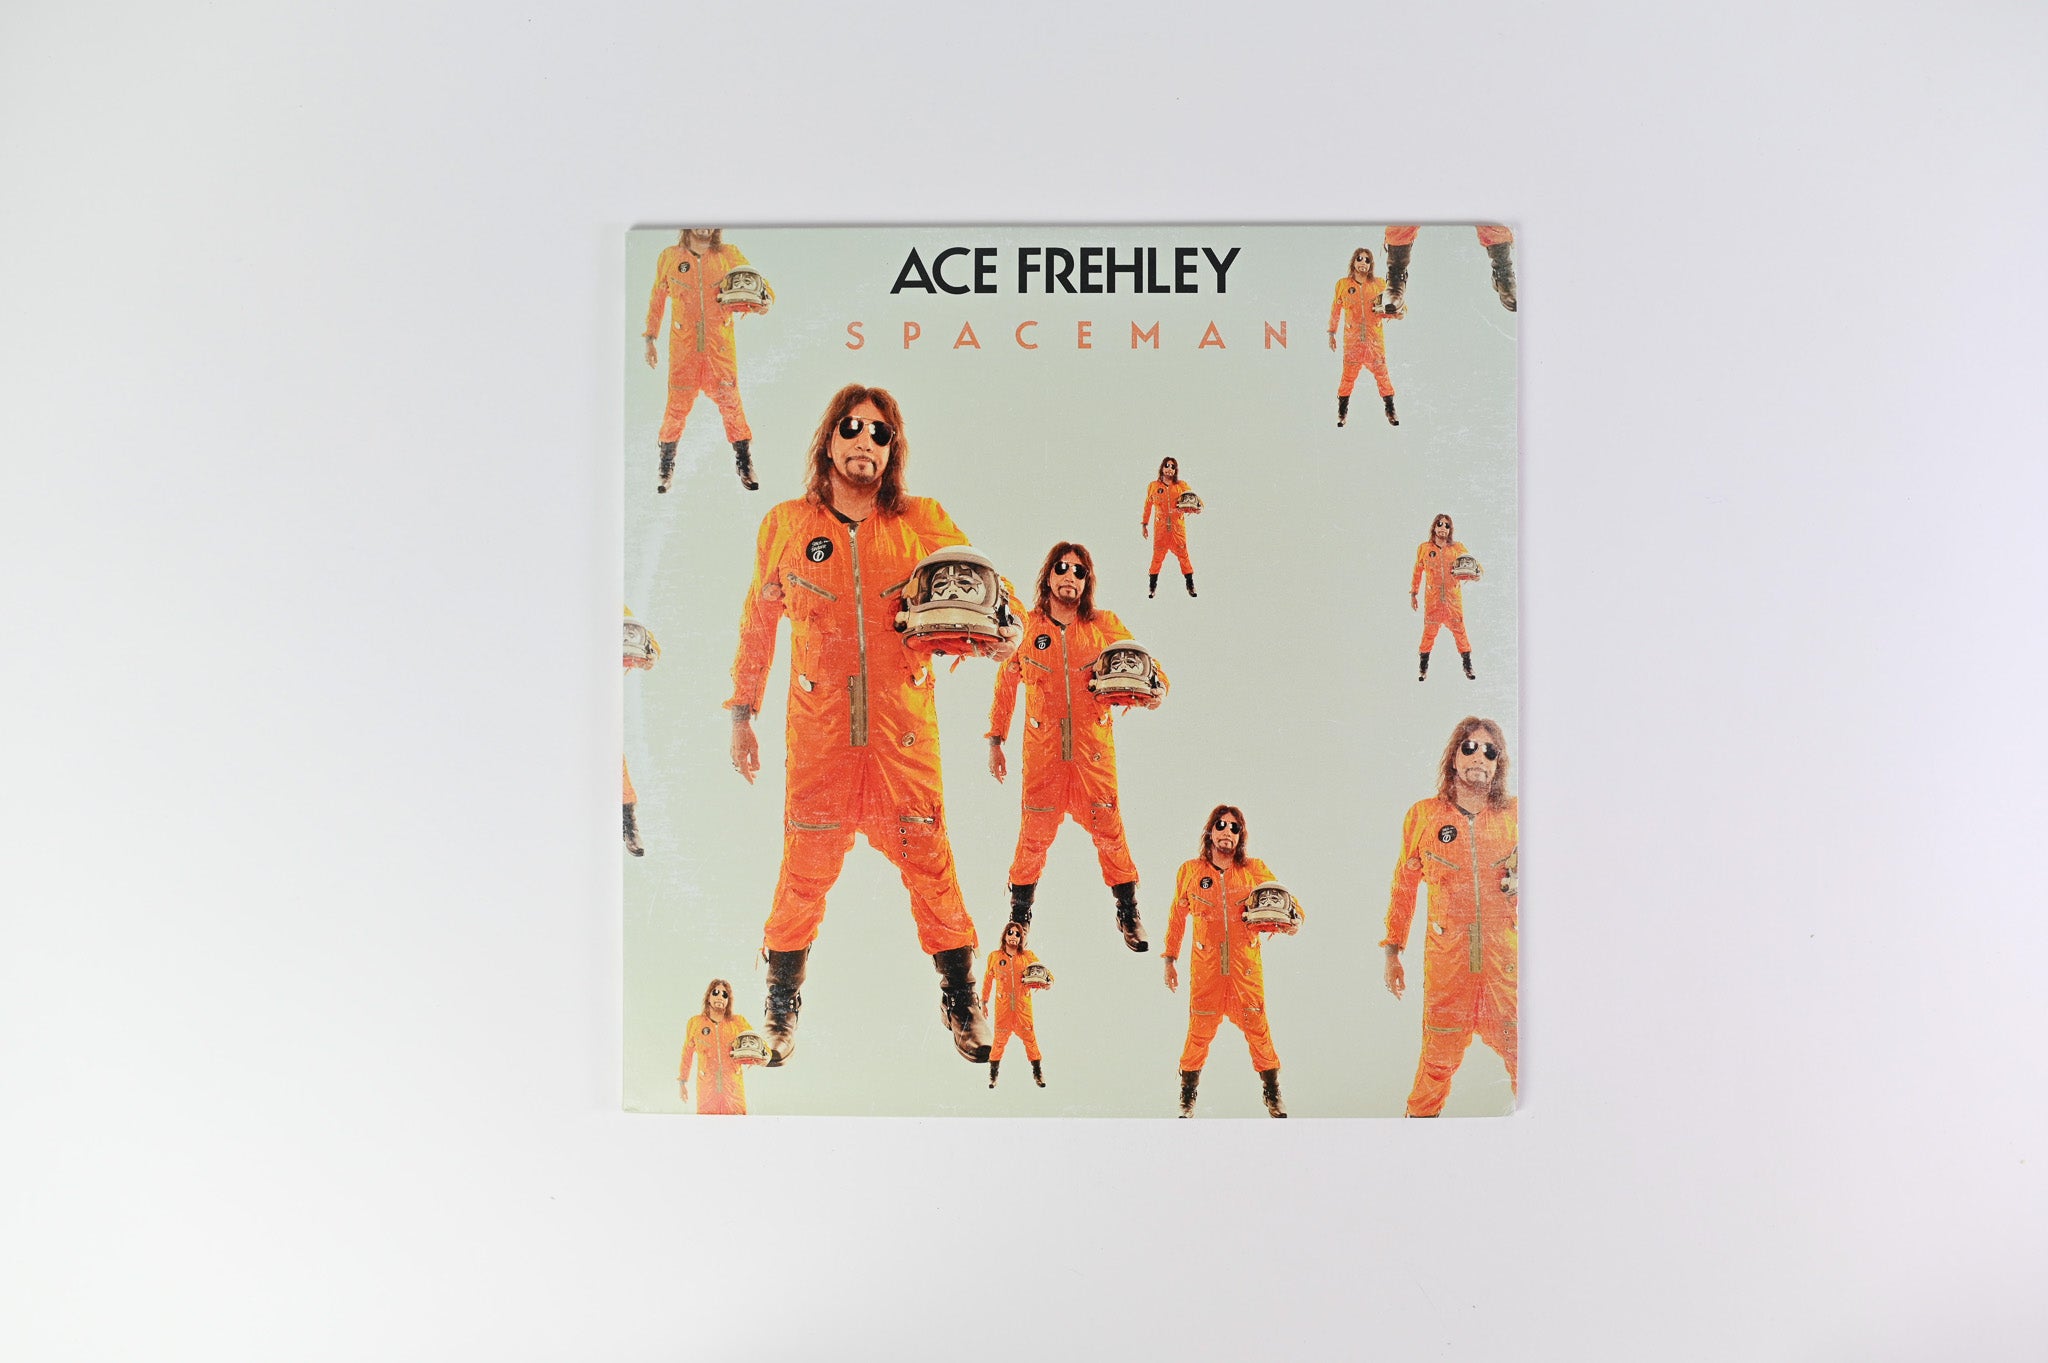 Ace Frehley - Spaceman on eOne Limited Orange Vinyl